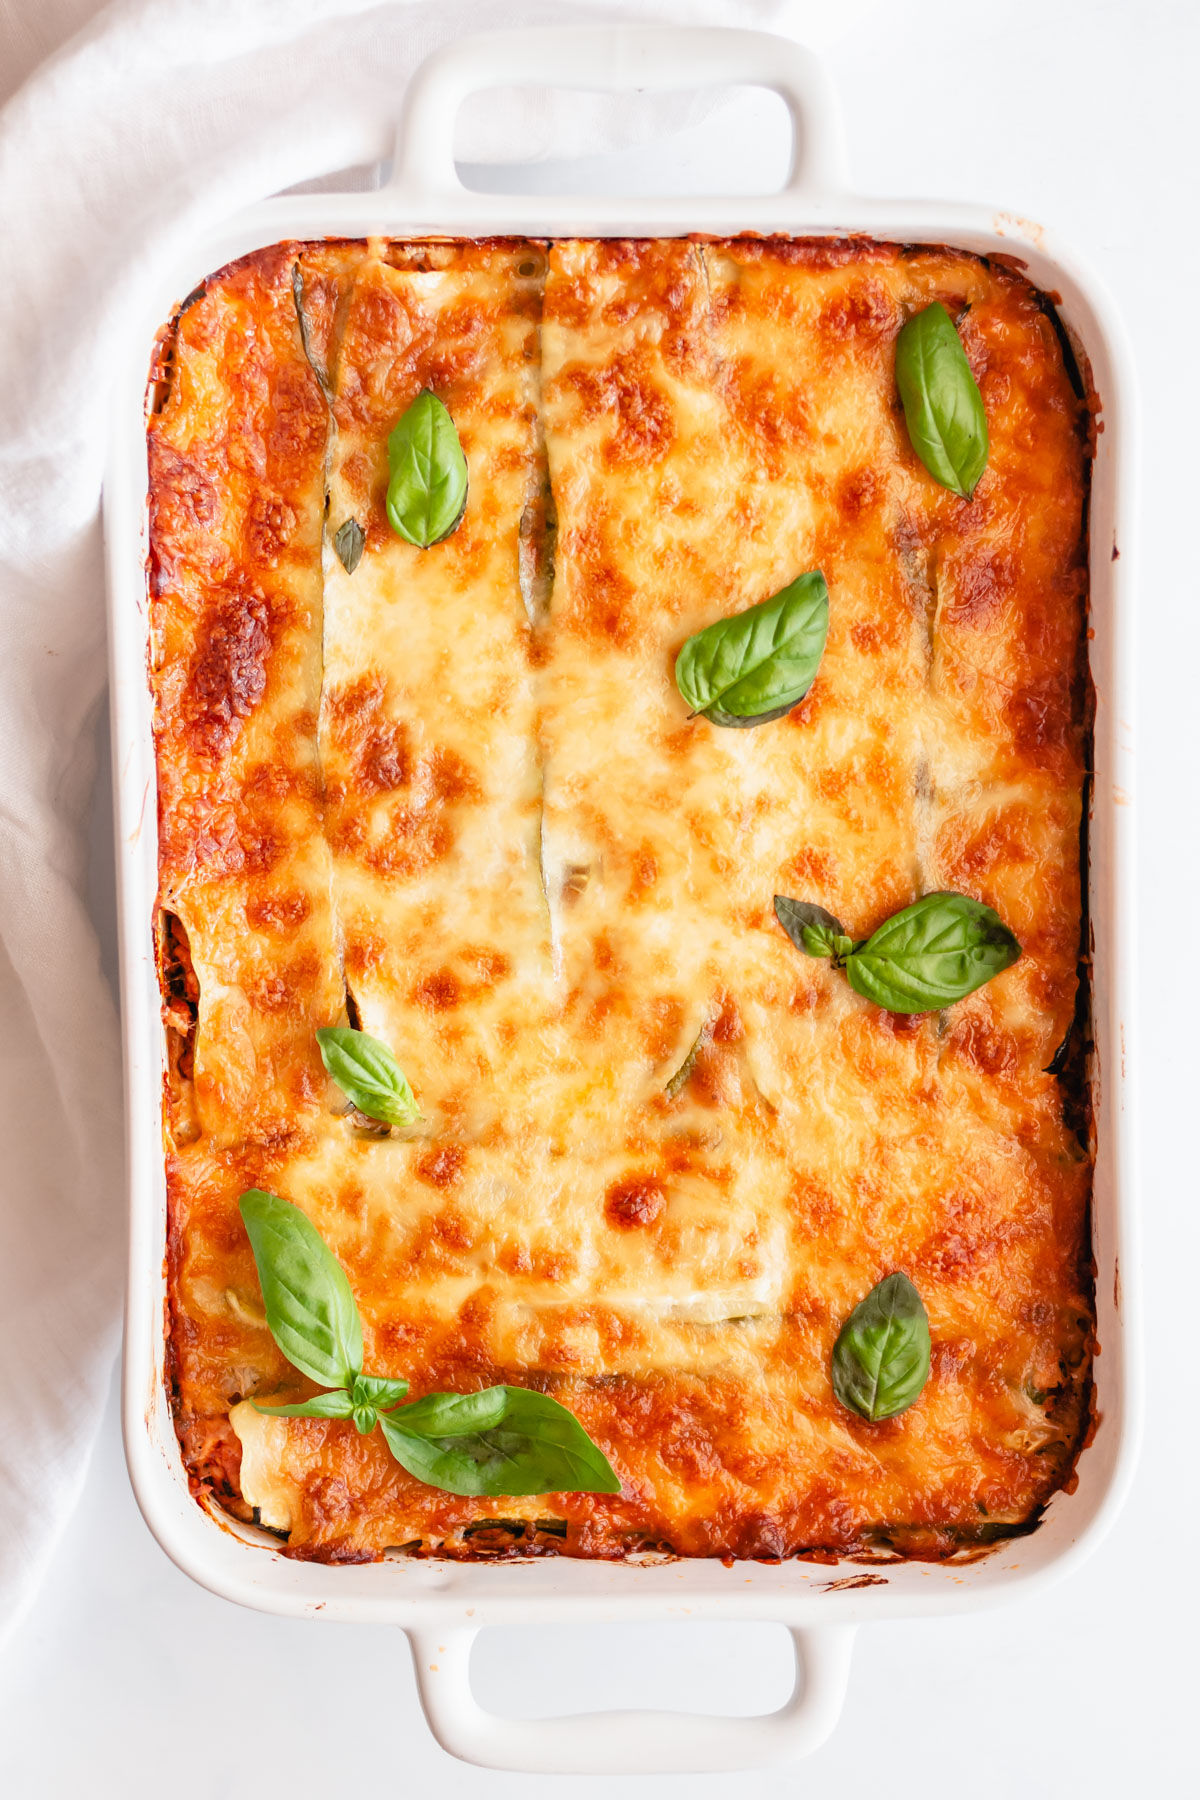 Zucchini lasagna in a white baking dish.